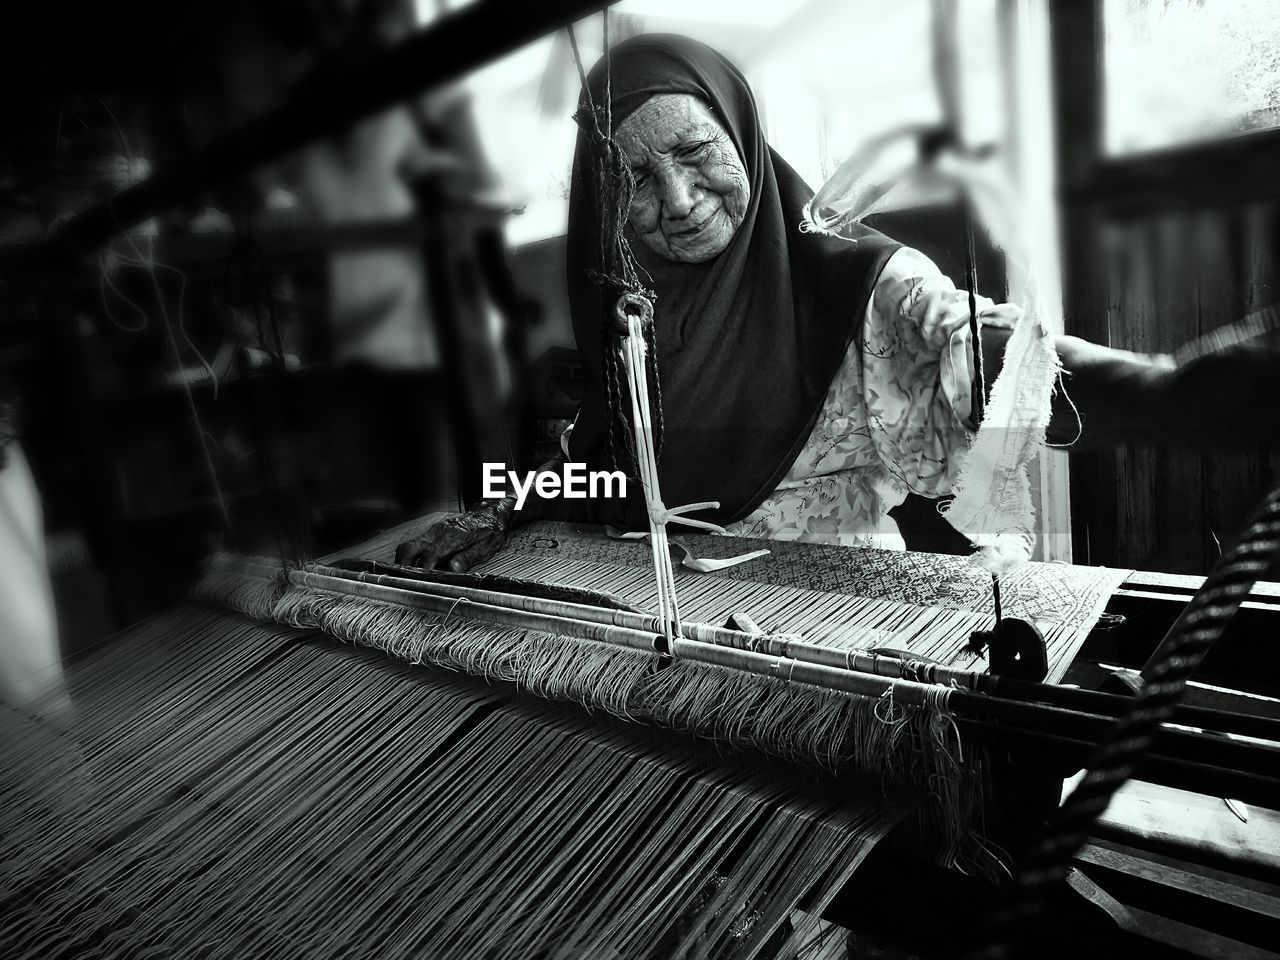 Senior woman weaving loom